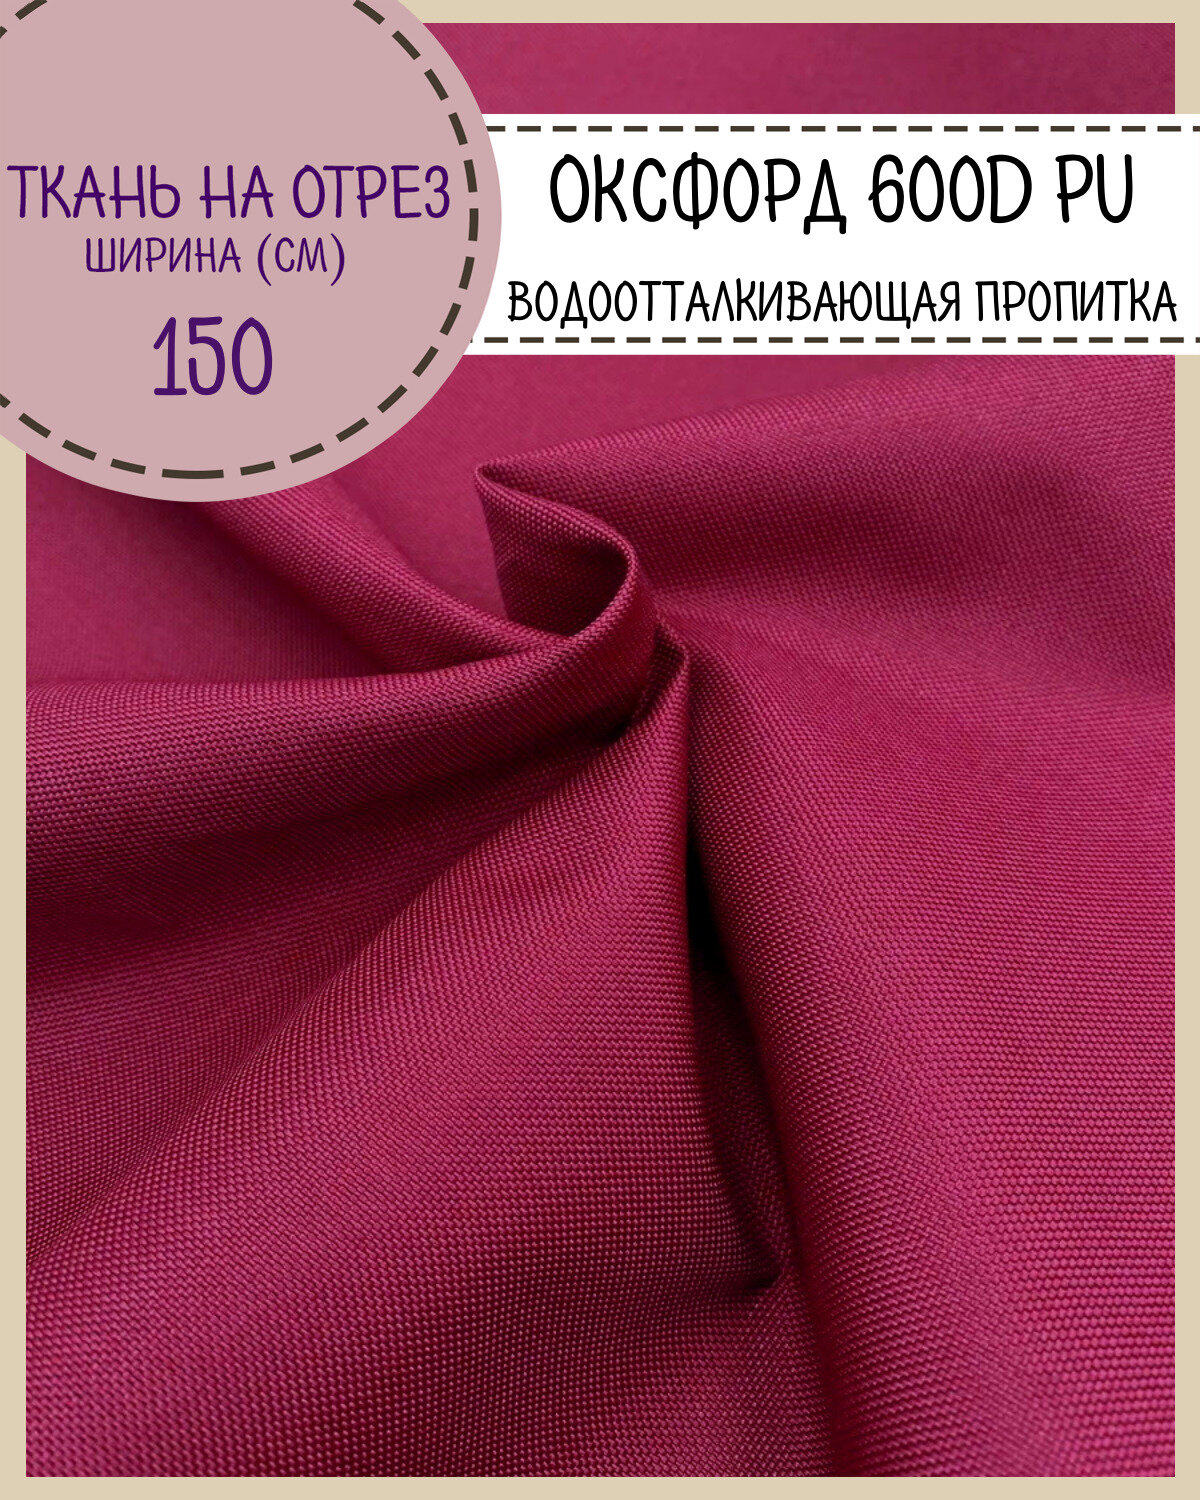 Ткань Оксфорд Oxford 600D PU 1000, пропитка водоотталкивающая, цв. розово-малиновый, ш-150 см, на отрез, цена за пог. метр